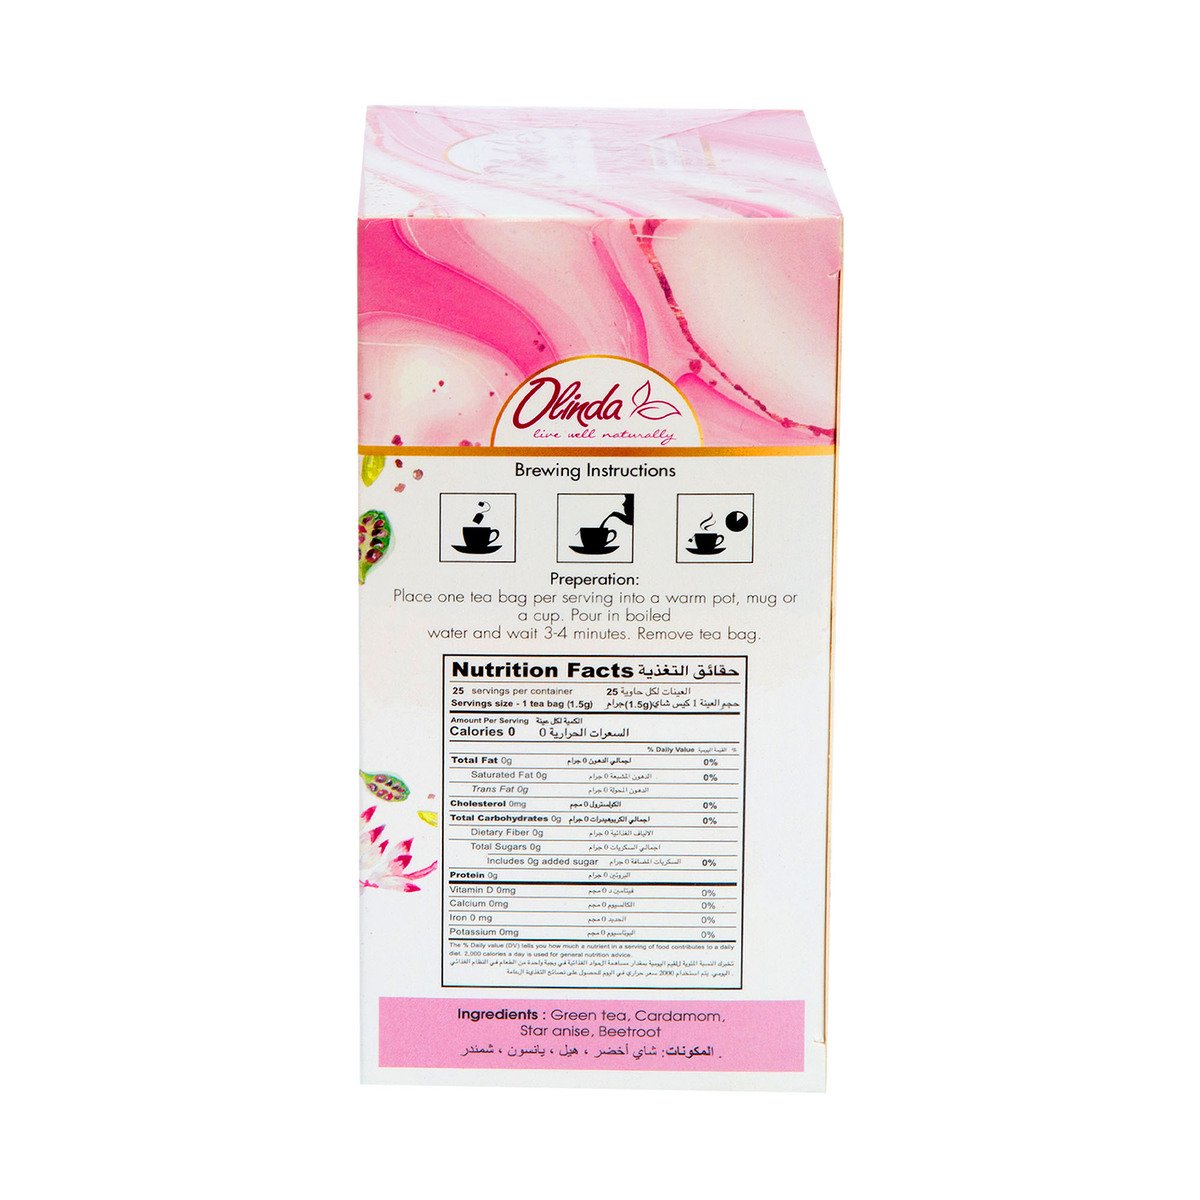 Olinda Pink Tea Kashmir, 25 pcs, 37.5 g